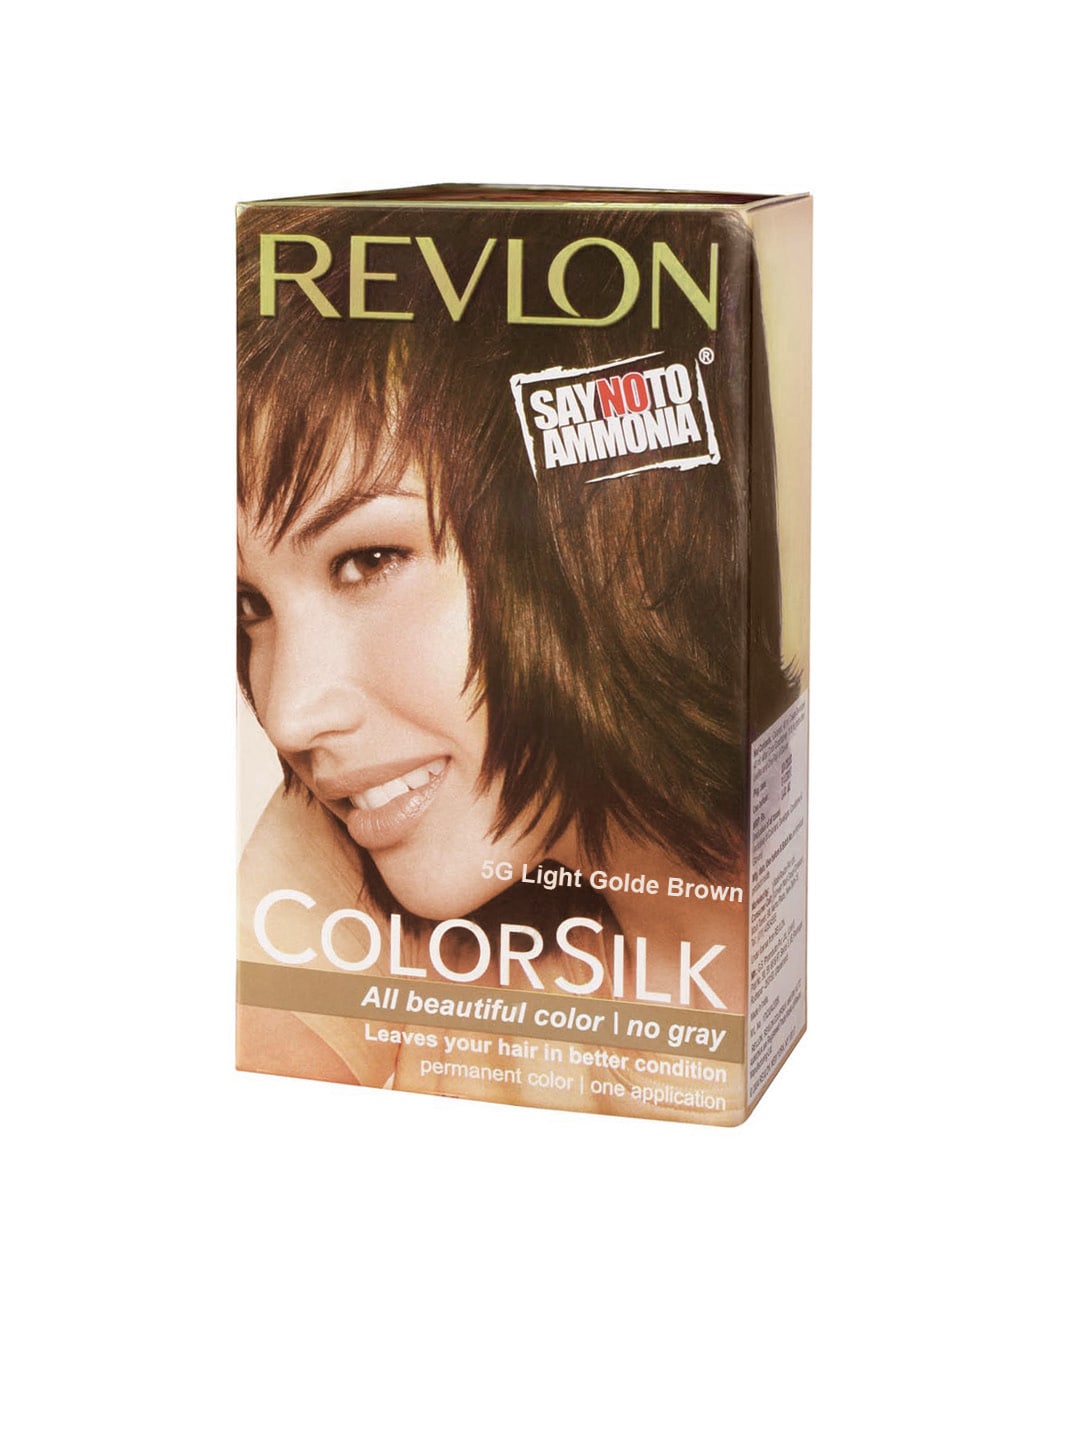 Revlon Color Silk Light Golden Brown Hair Colour 5G